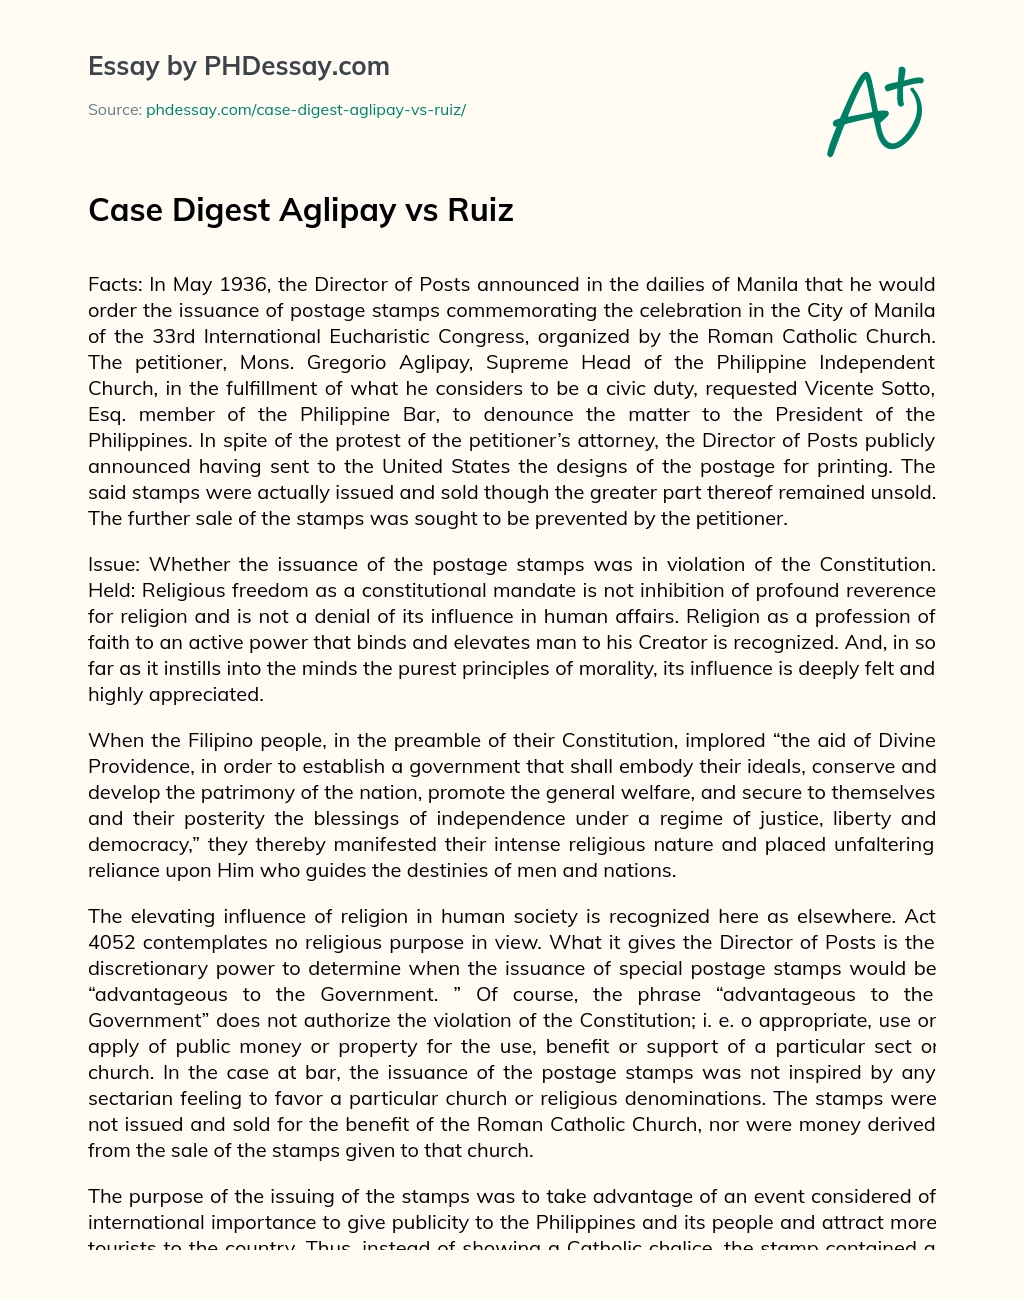 Case Digest Aglipay vs Ruiz essay